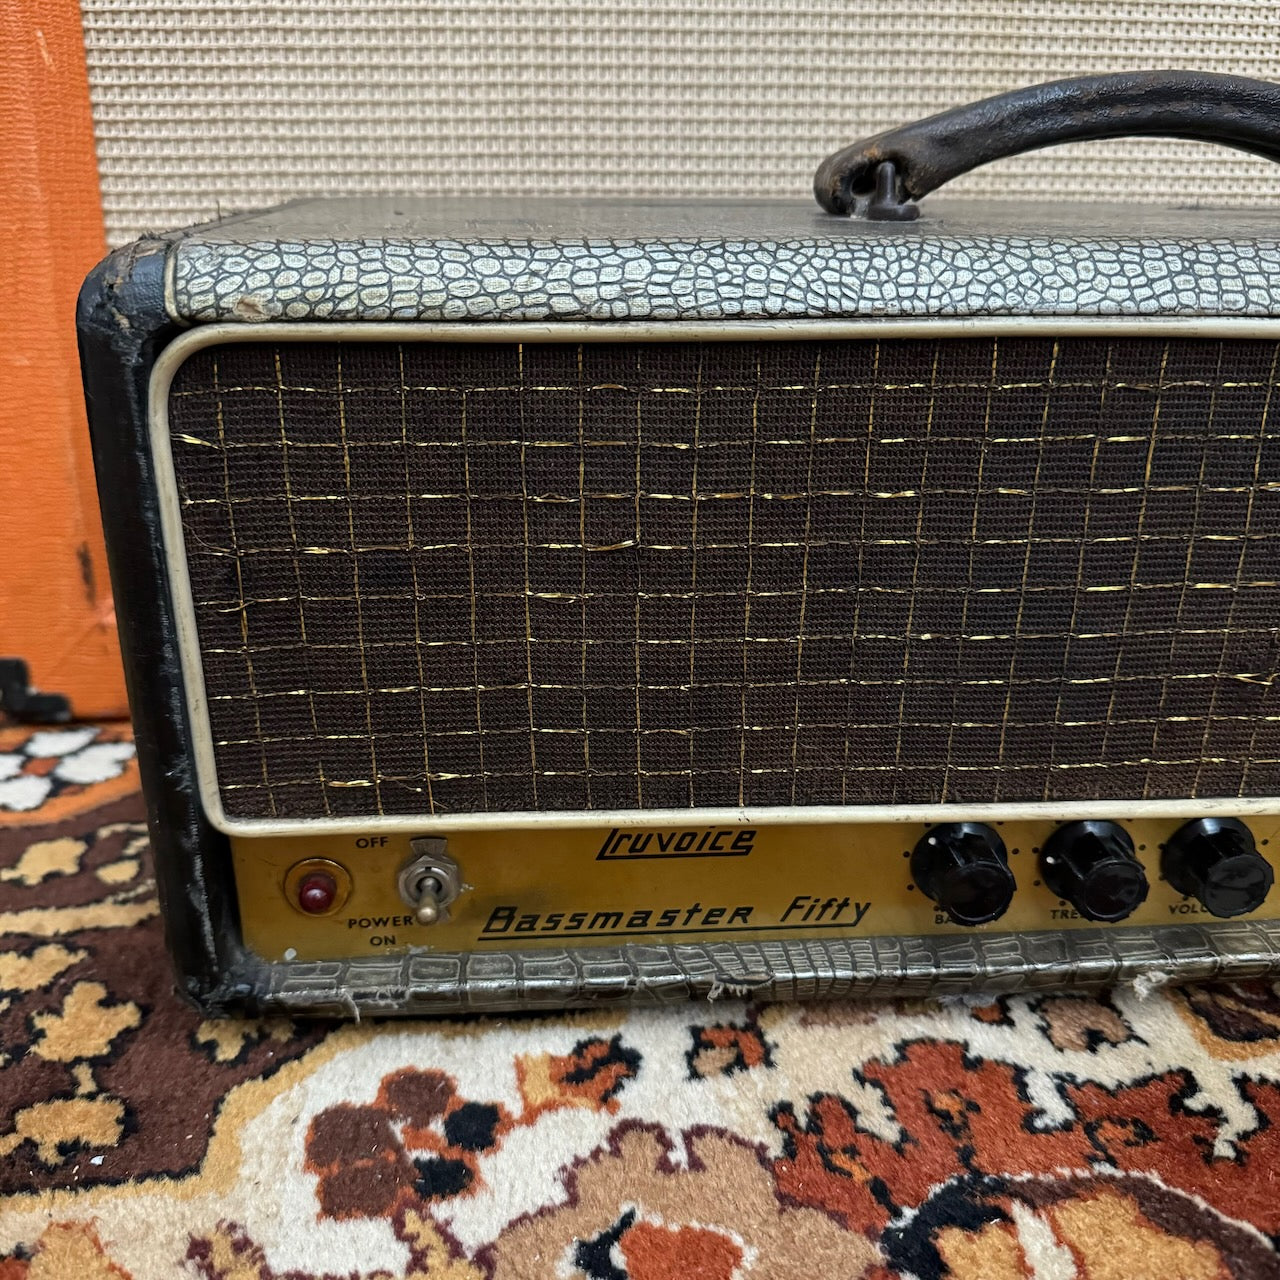 Vintage 1964 Selmer Truvoice Bassmaster 50 Amplifier 1960s